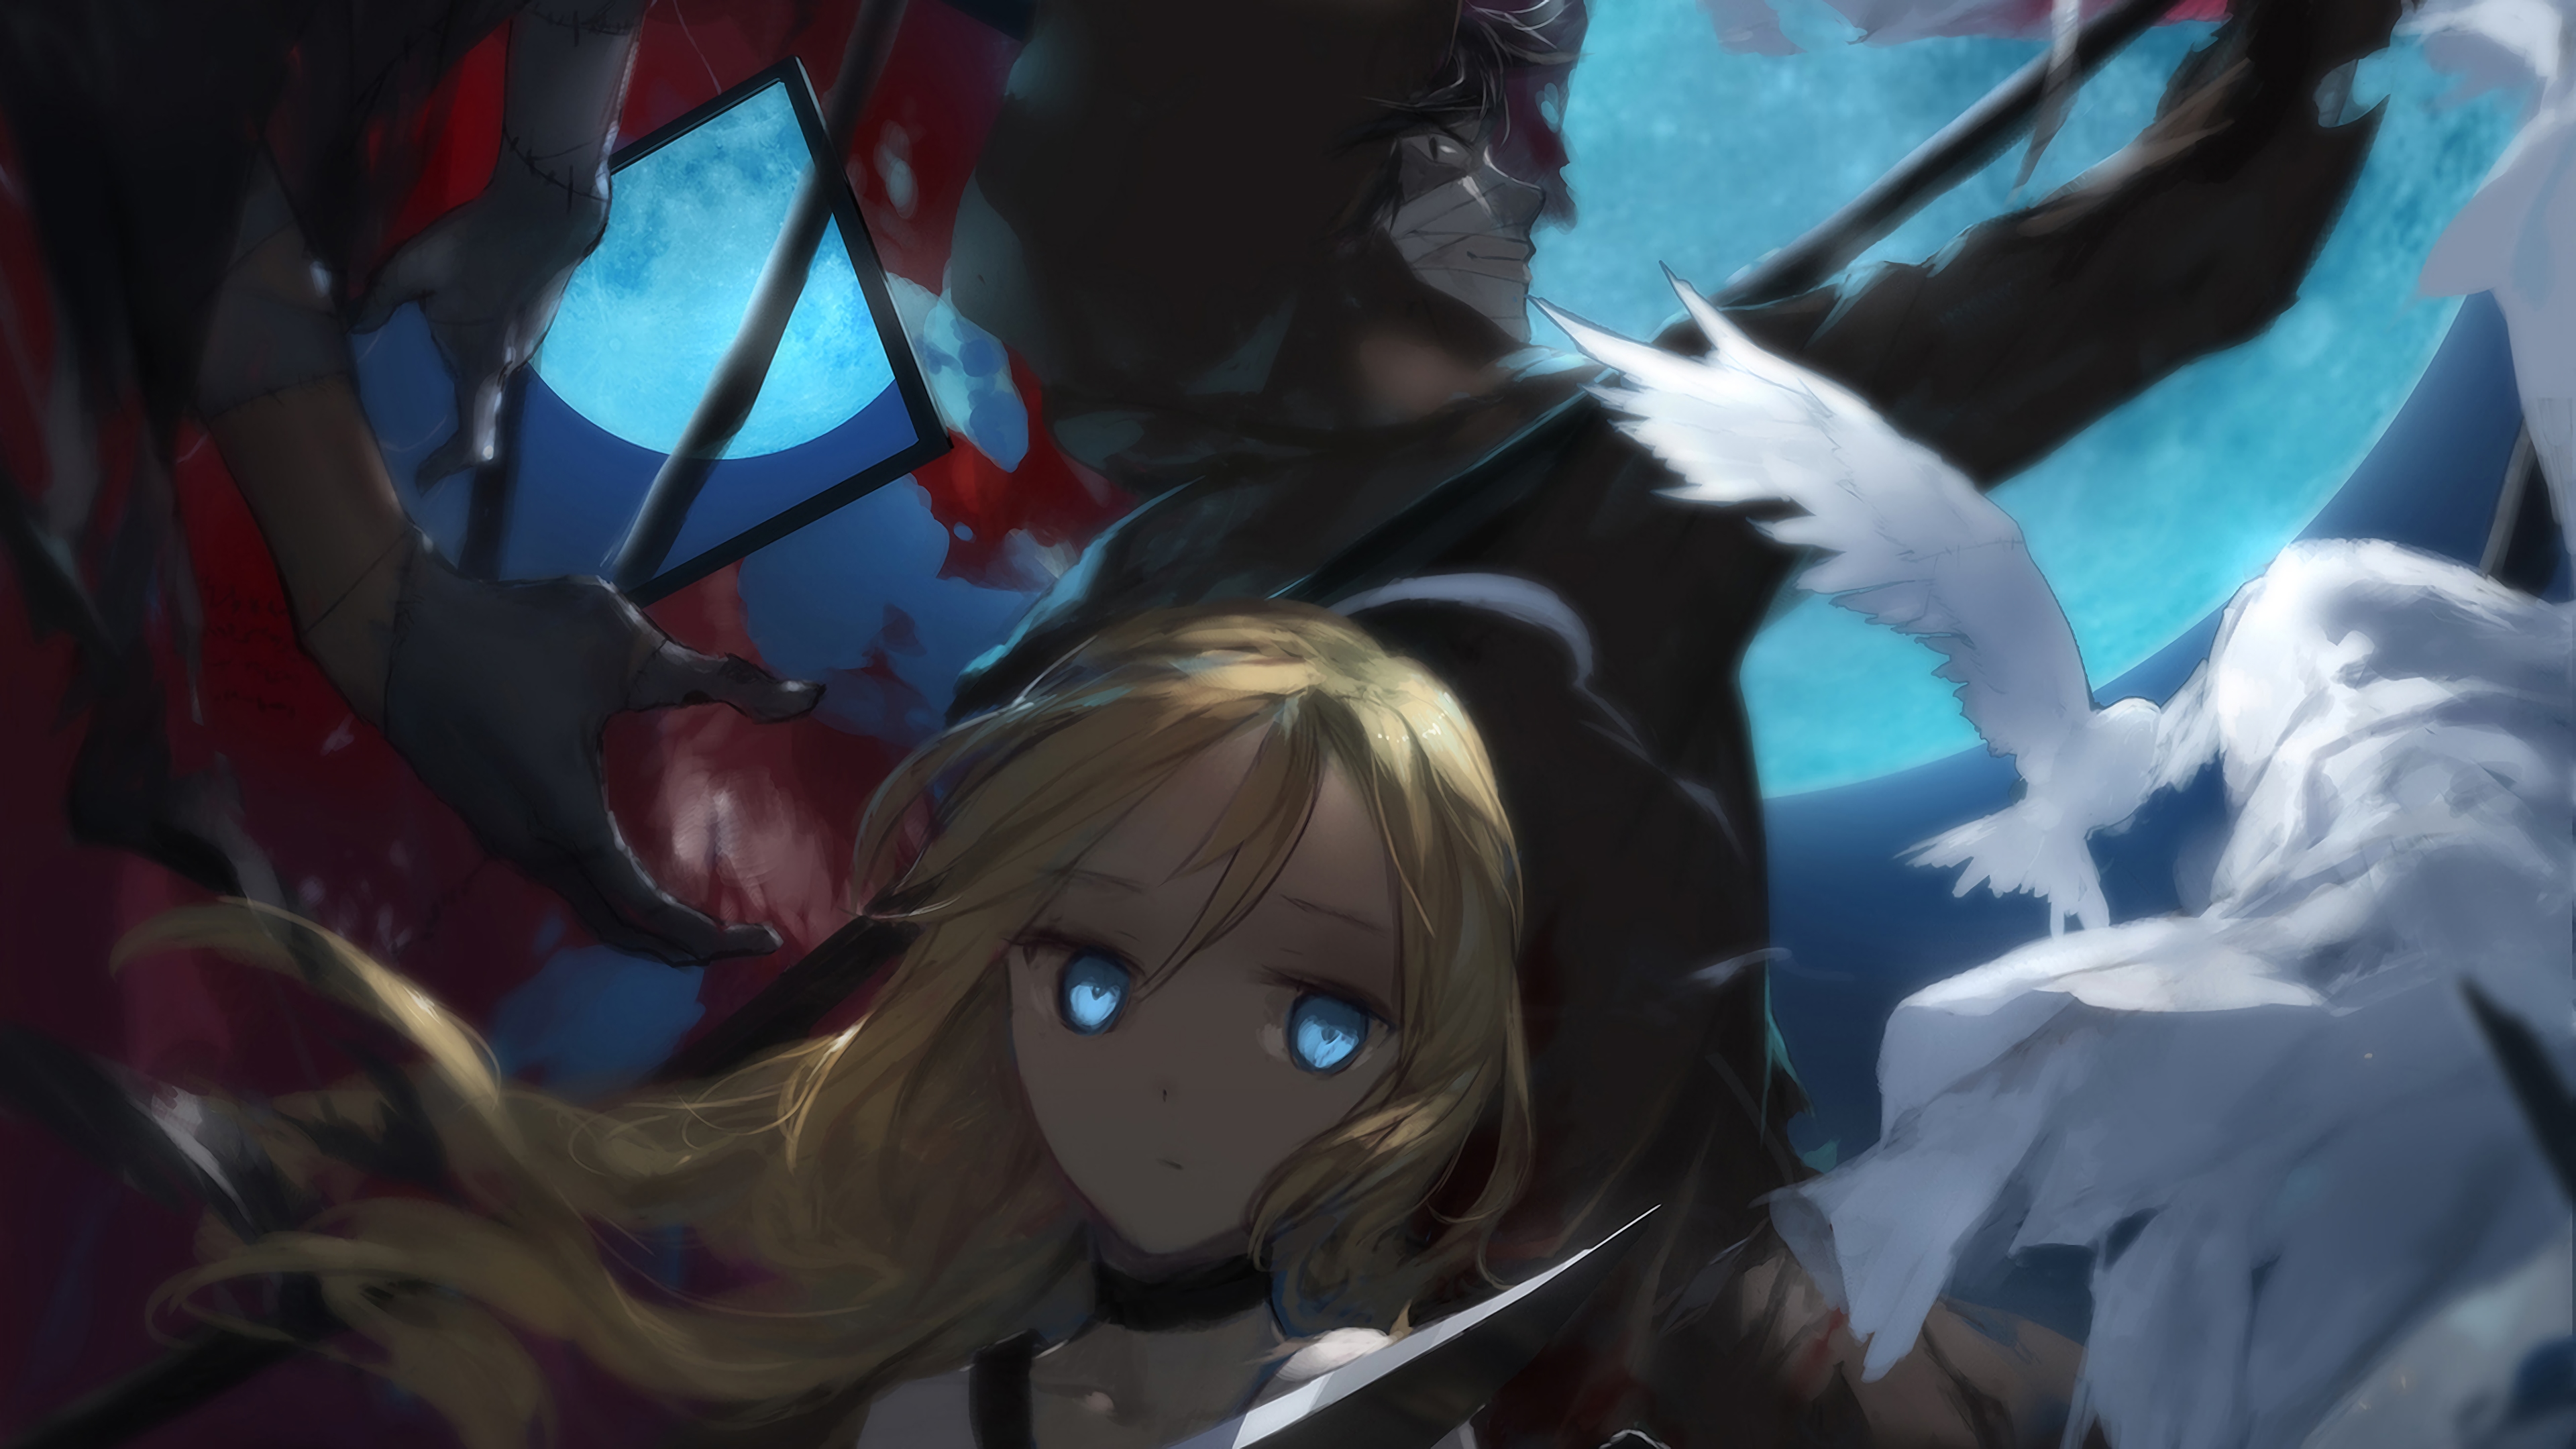 Anime Angels Of Death, Zack (Angels Of Death), Rachel Gardner, Satsuriku No  Tenshi, 750x1334 Phone HD Wallpaper